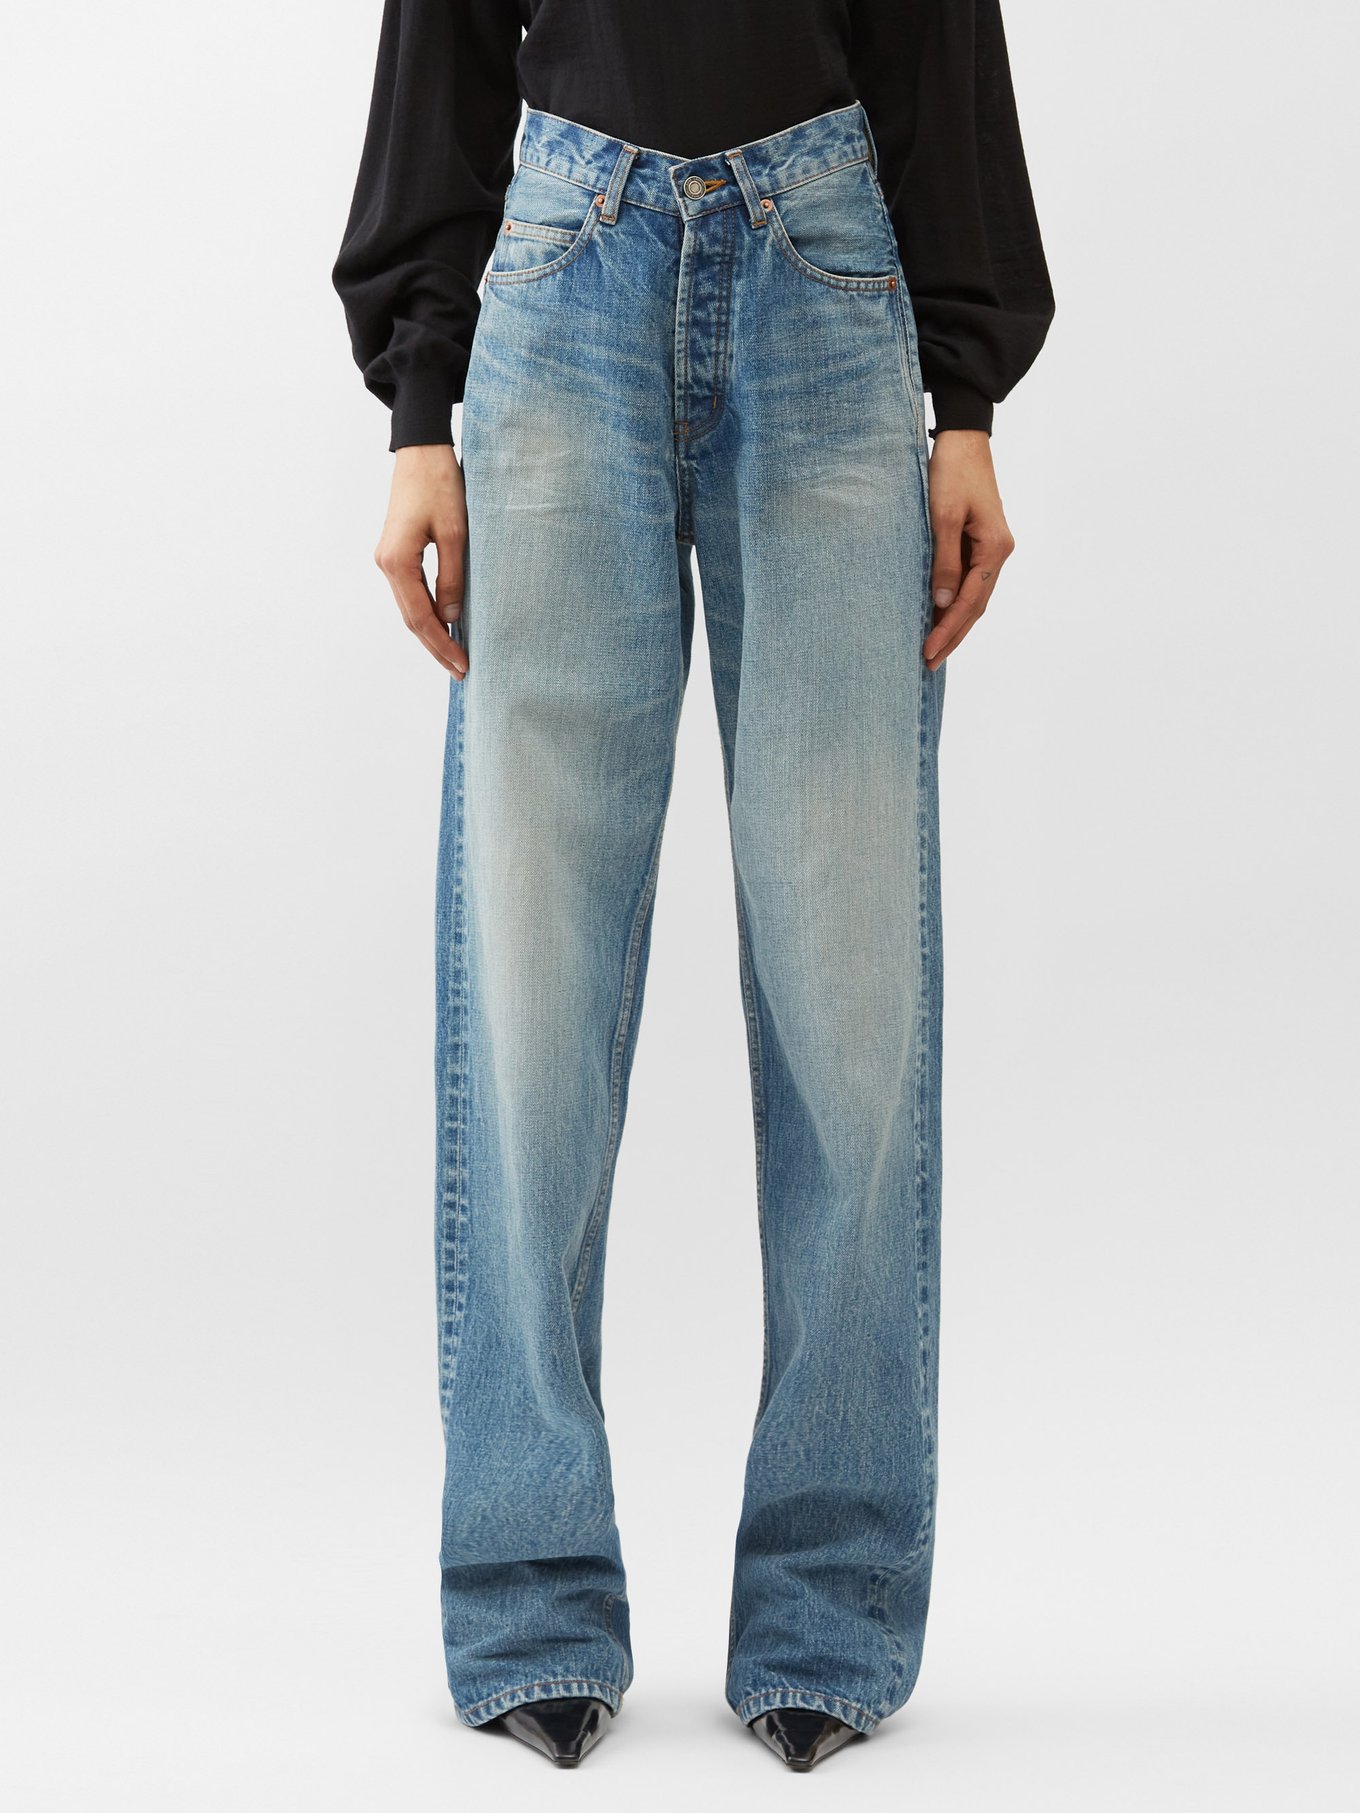 V-waist long baggy jeans in vintage blue denim, Saint Laurent